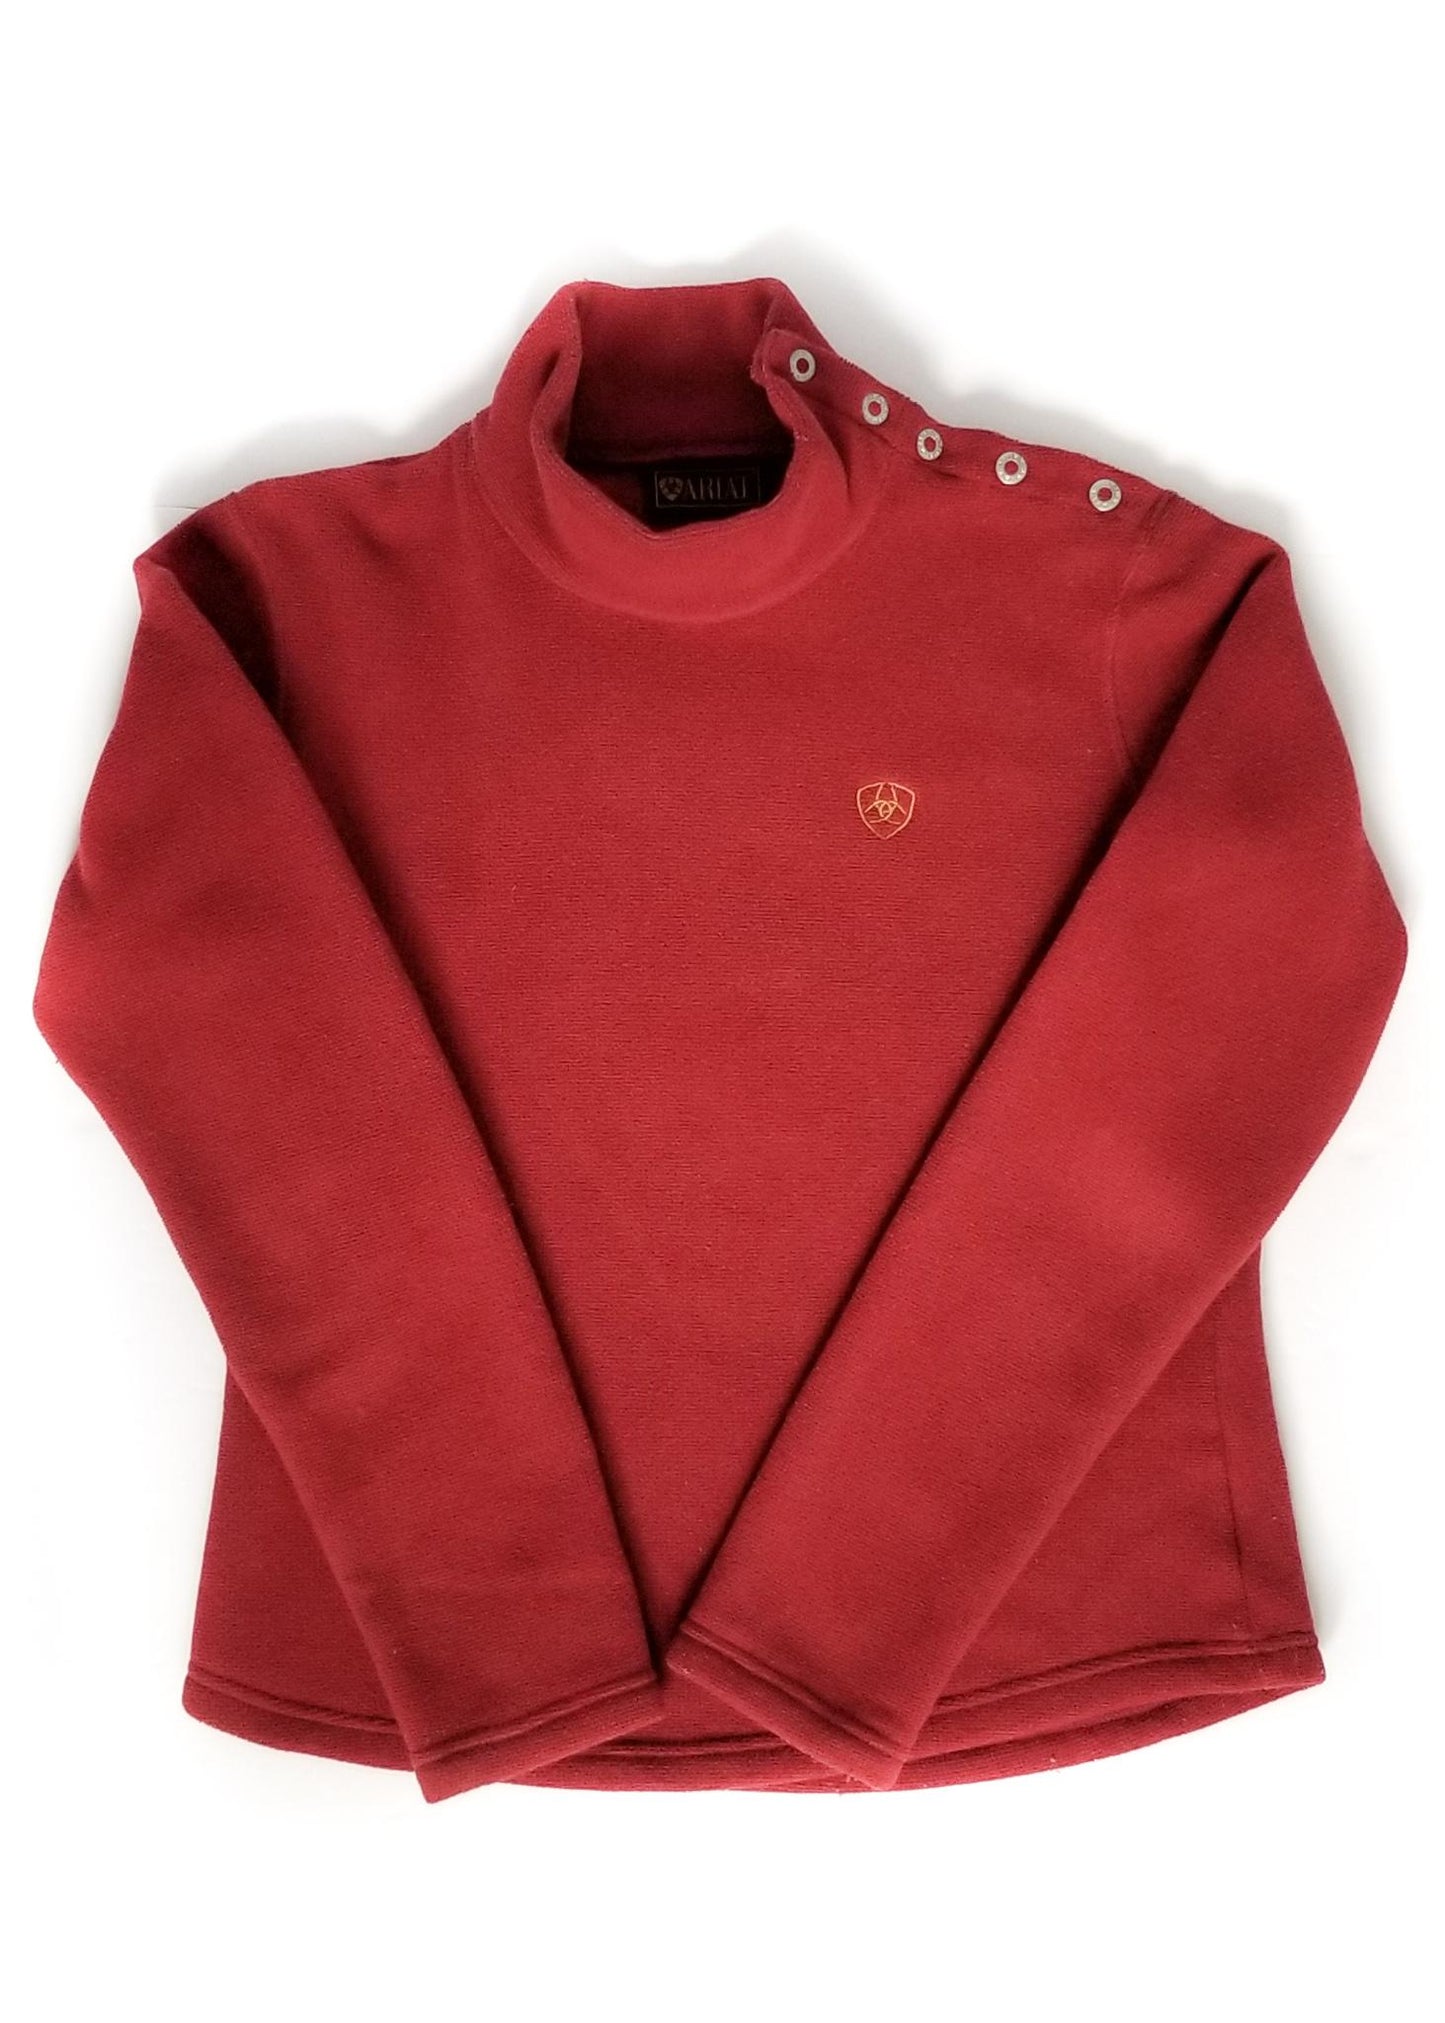 Ariat Fleece Turtleneck Sweater - Red - Small